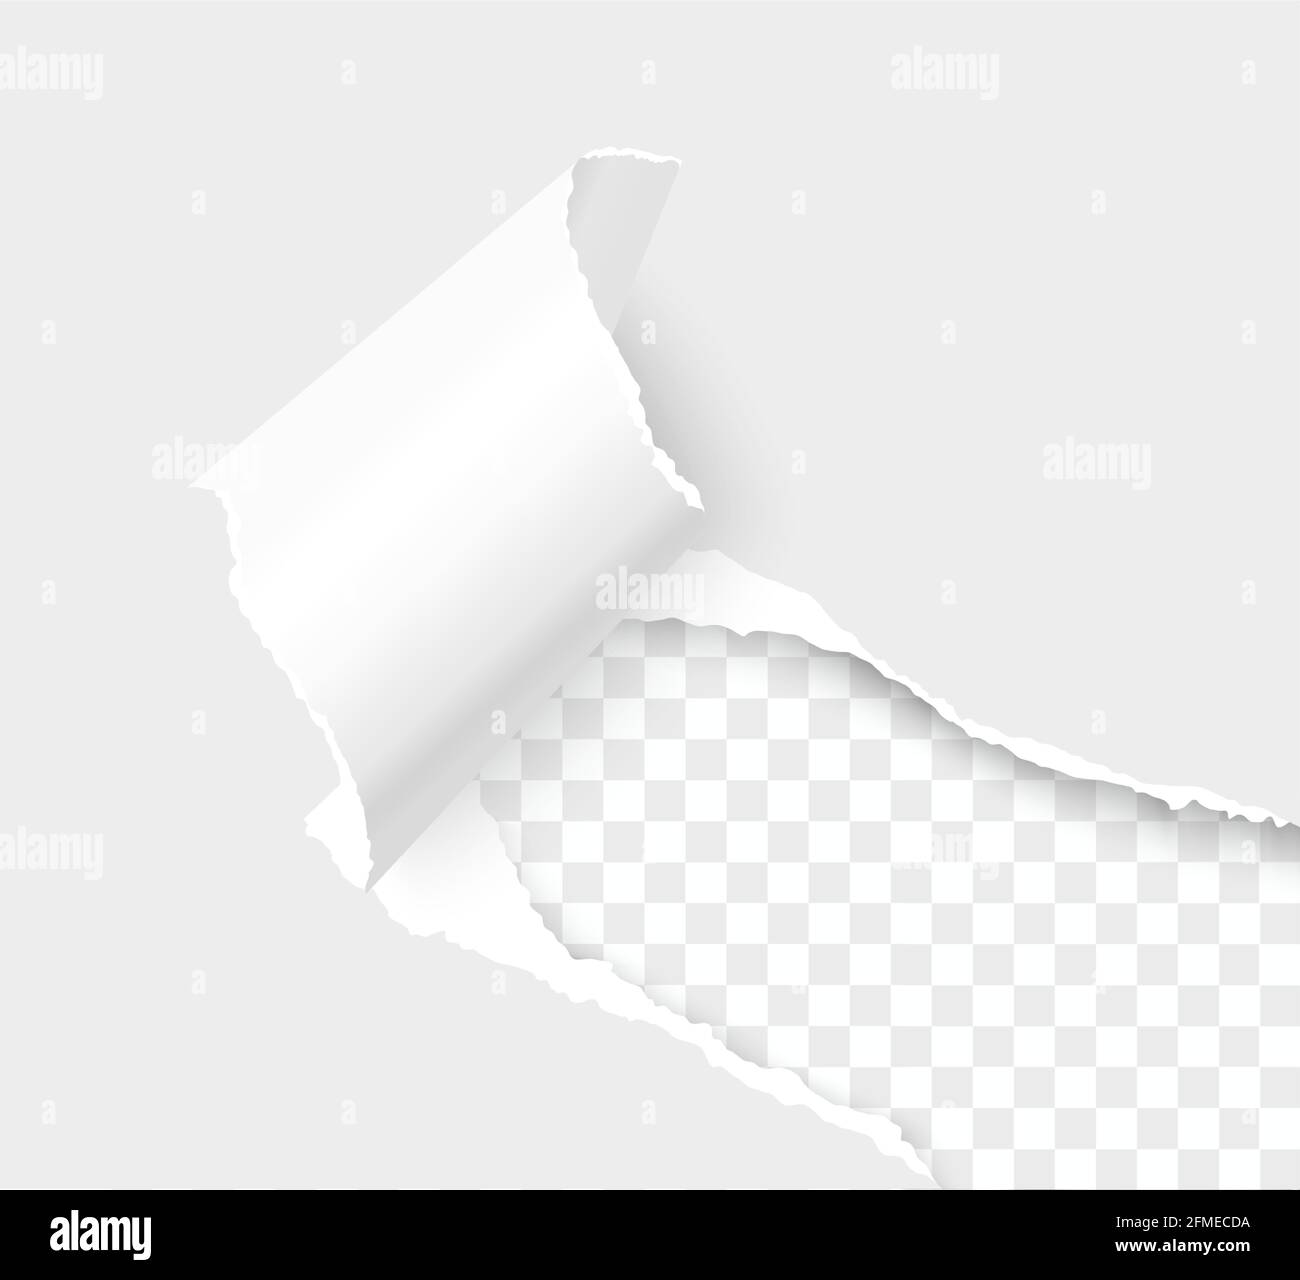 Esquina de papel rota con espacio para texto. Hoja de papel con bordes  rasgados vectoriales realistas Imagen Vector de stock - Alamy